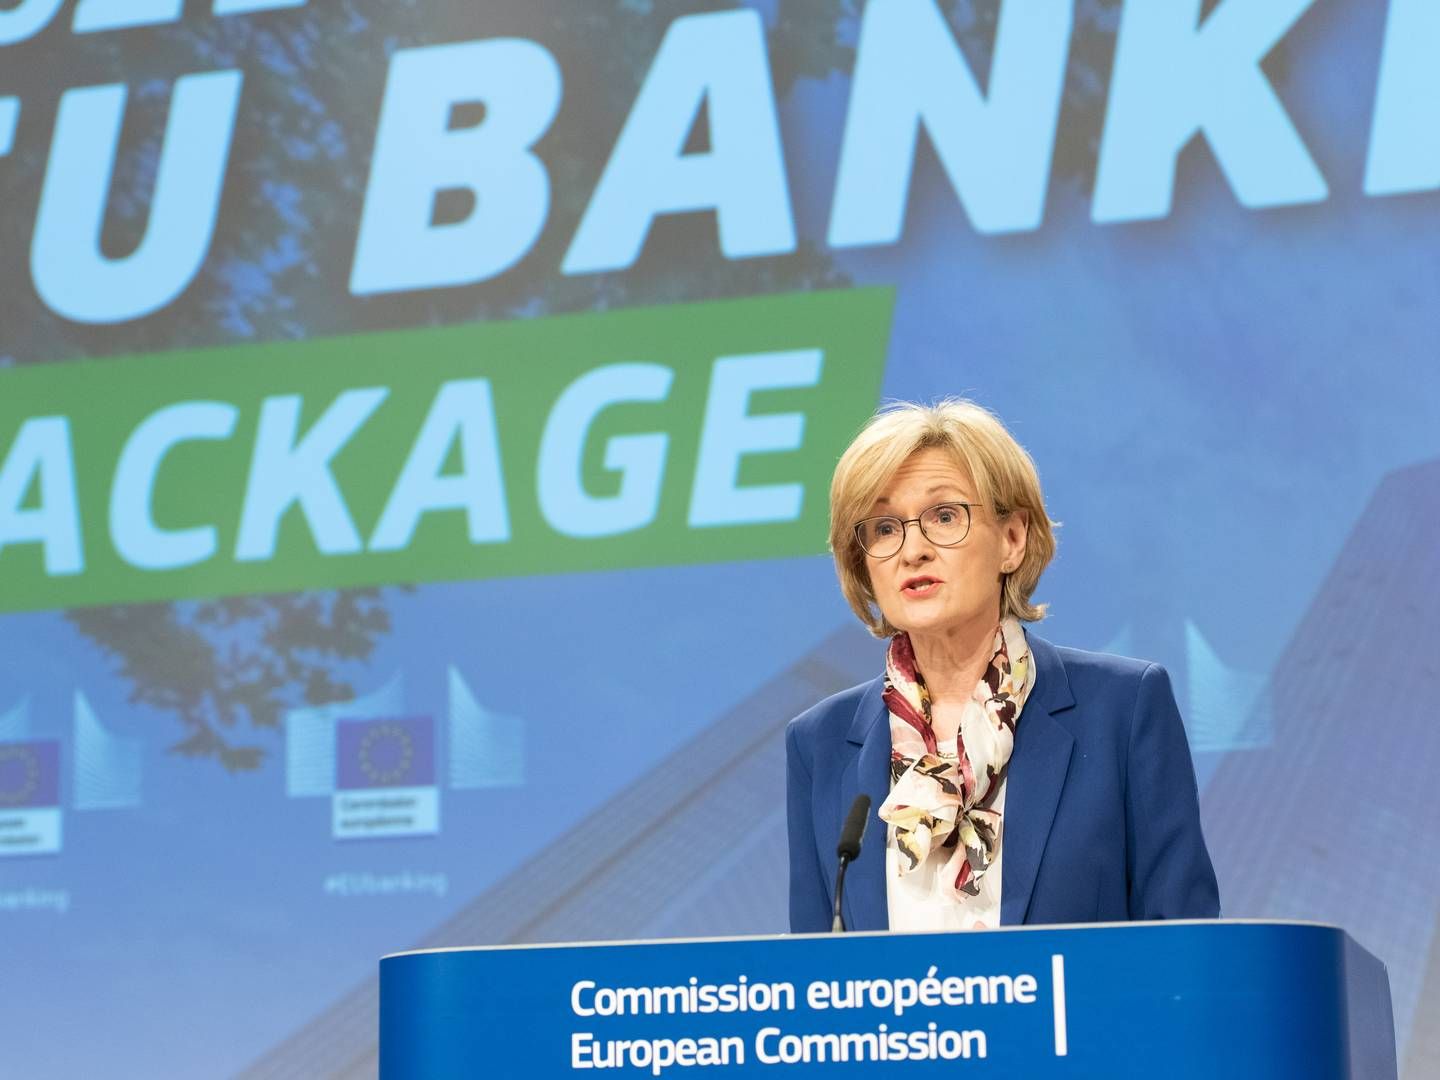 EU-Kommissær for de finansielle markeder, Mairead McGuinness, var blandt de kommissærer, som tirsdag offentliggjorde en ny lovpakke på finansieringsområdet. | Foto: Aurore Martignoni / European Union